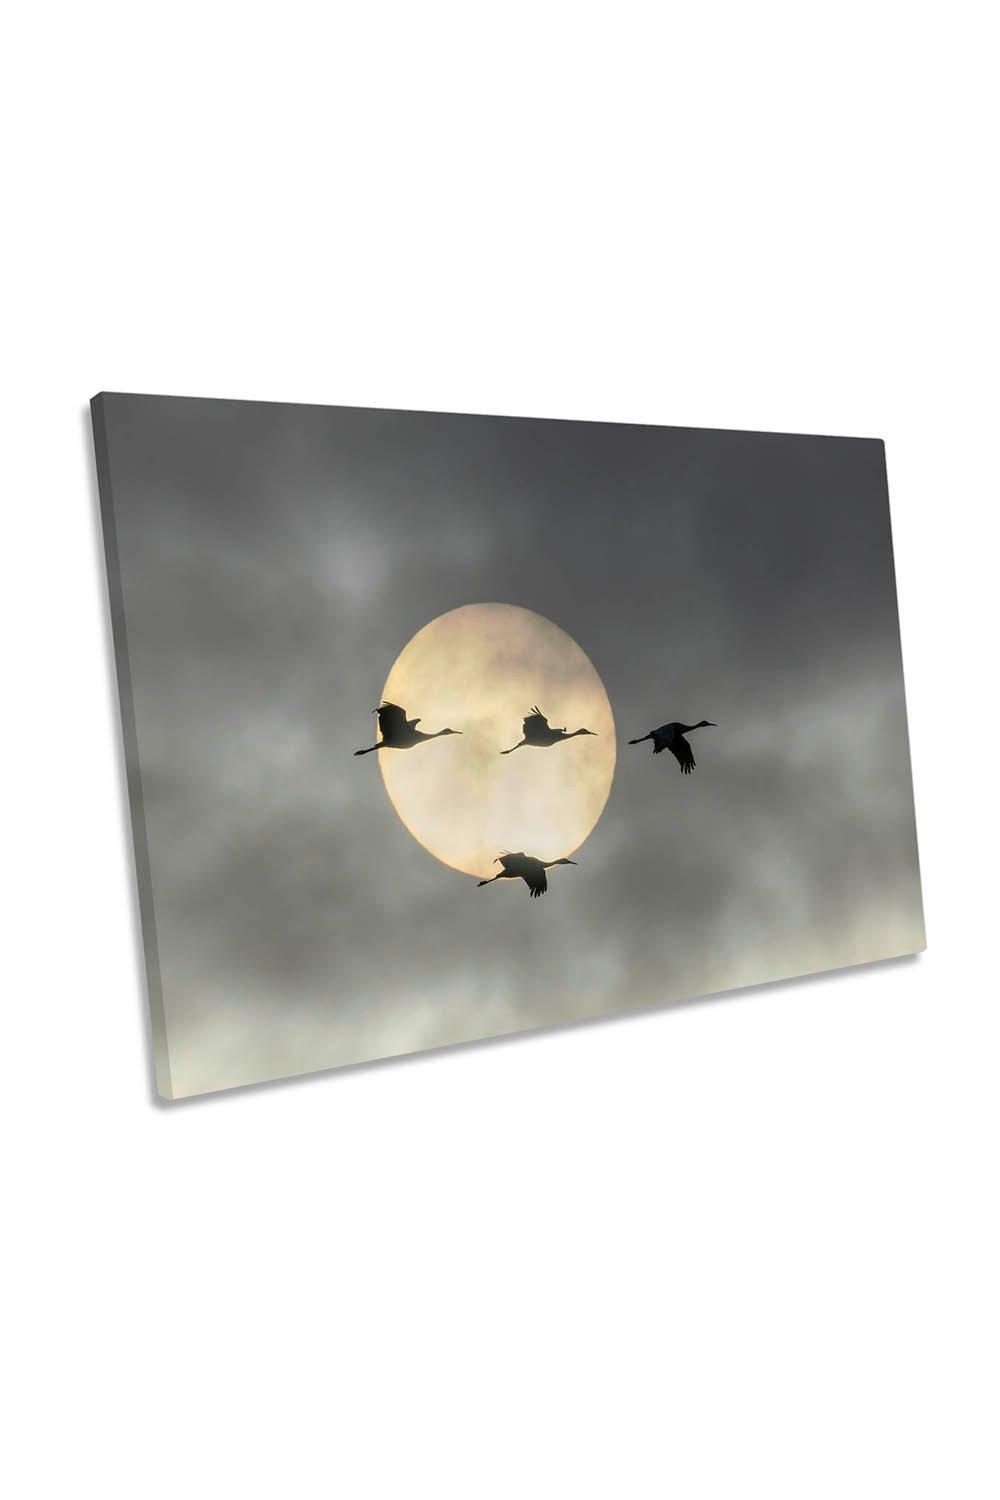 Over the Moon Crane Birds Flight Canvas Wall Art Picture Print